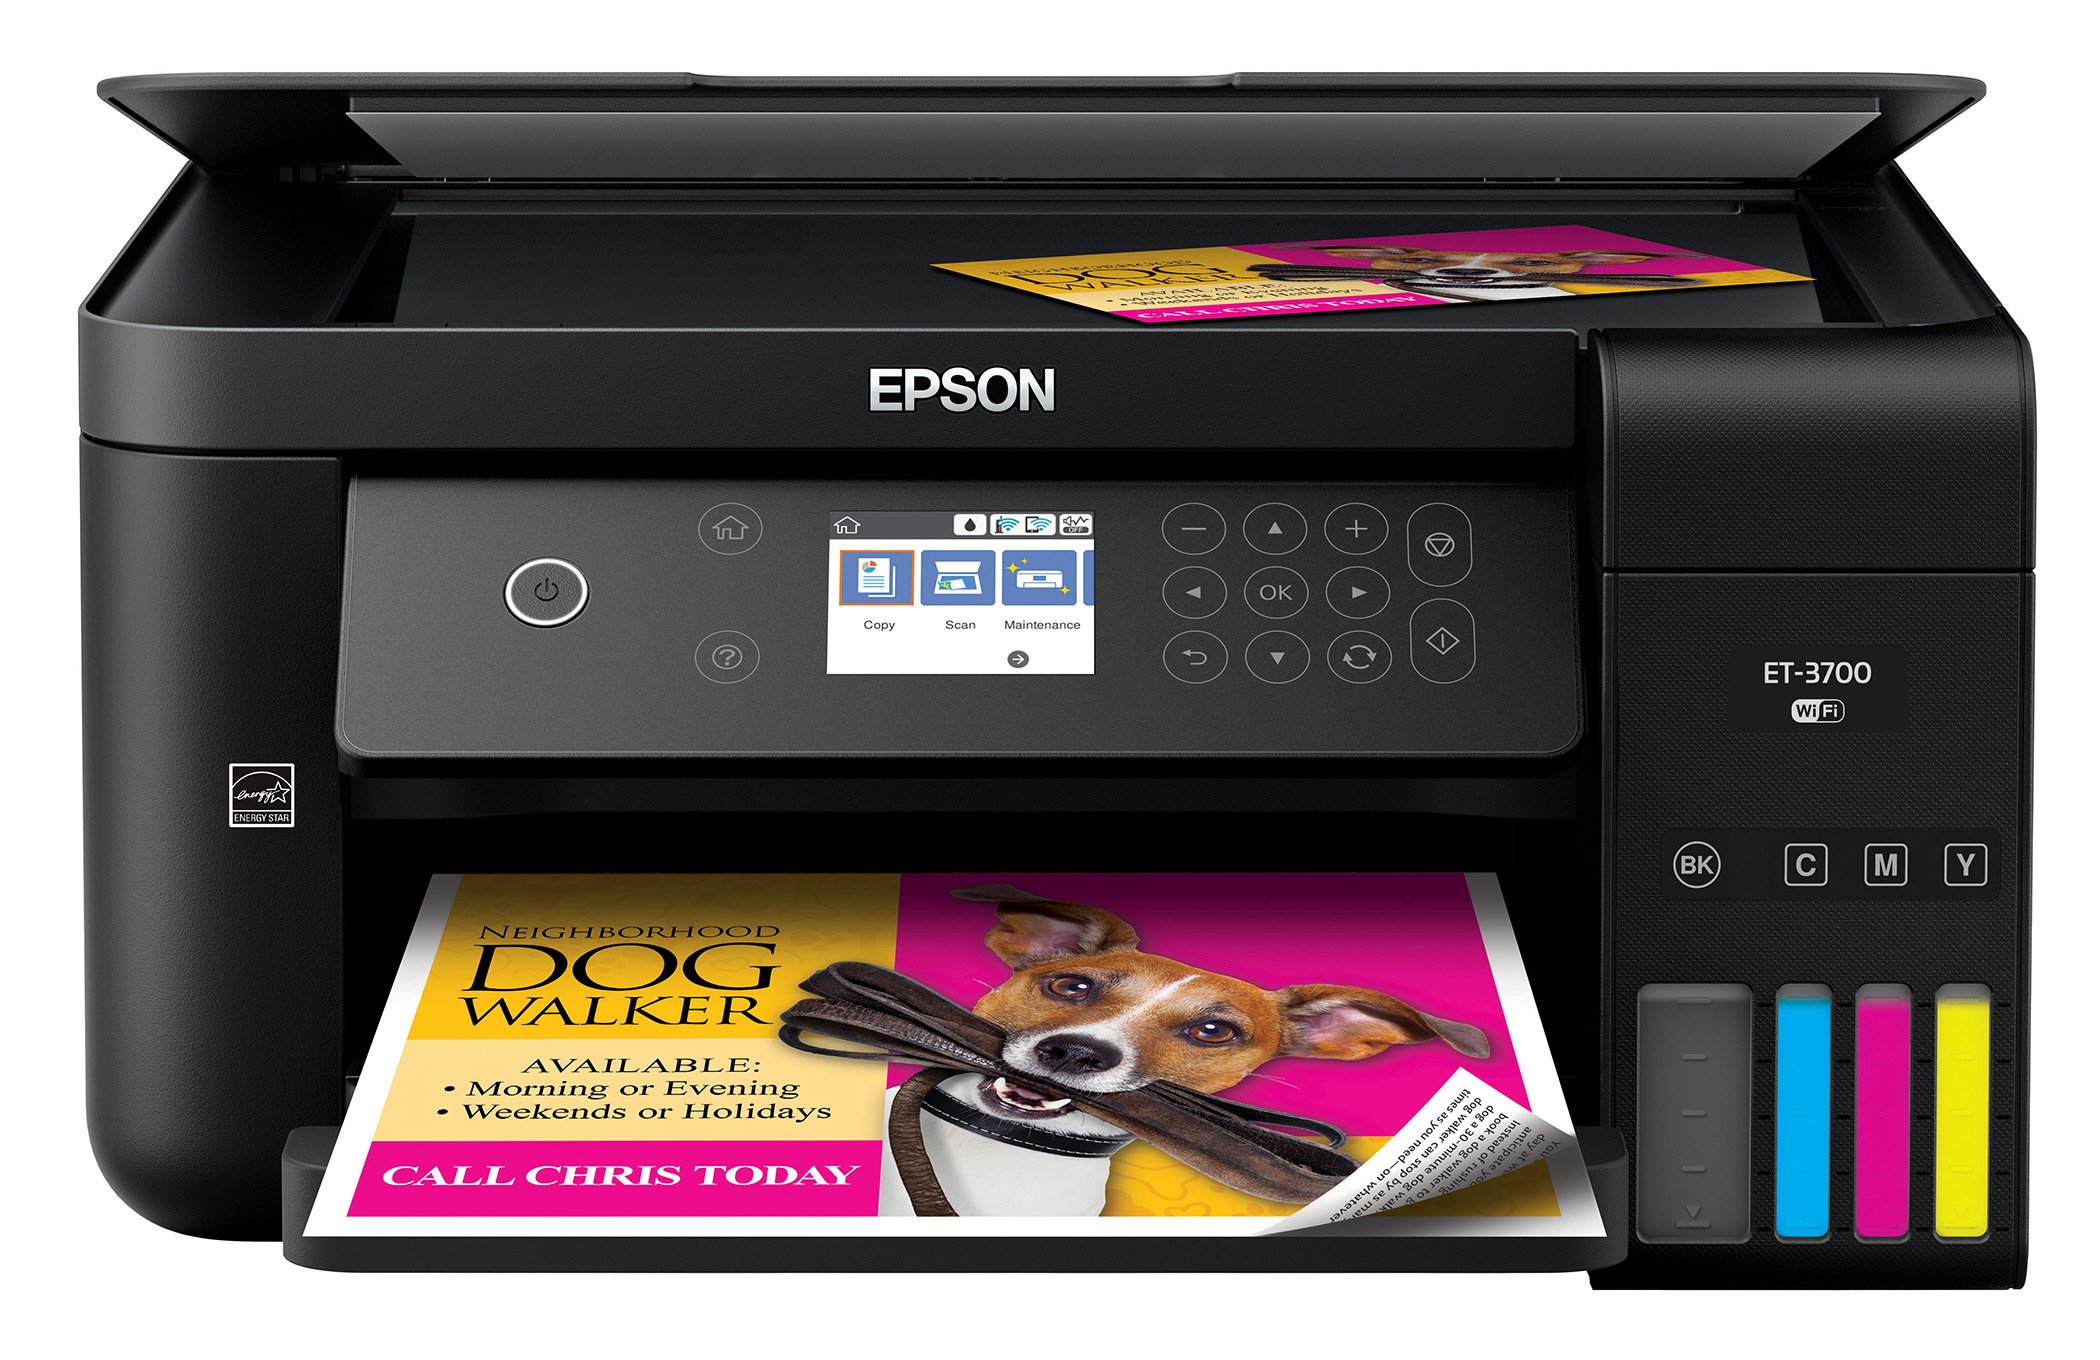 Epson l3150 купить. Epson l6160. Epson 3700 et. МФУ Epson l6160. Принтер Epson l4160 МФУ.